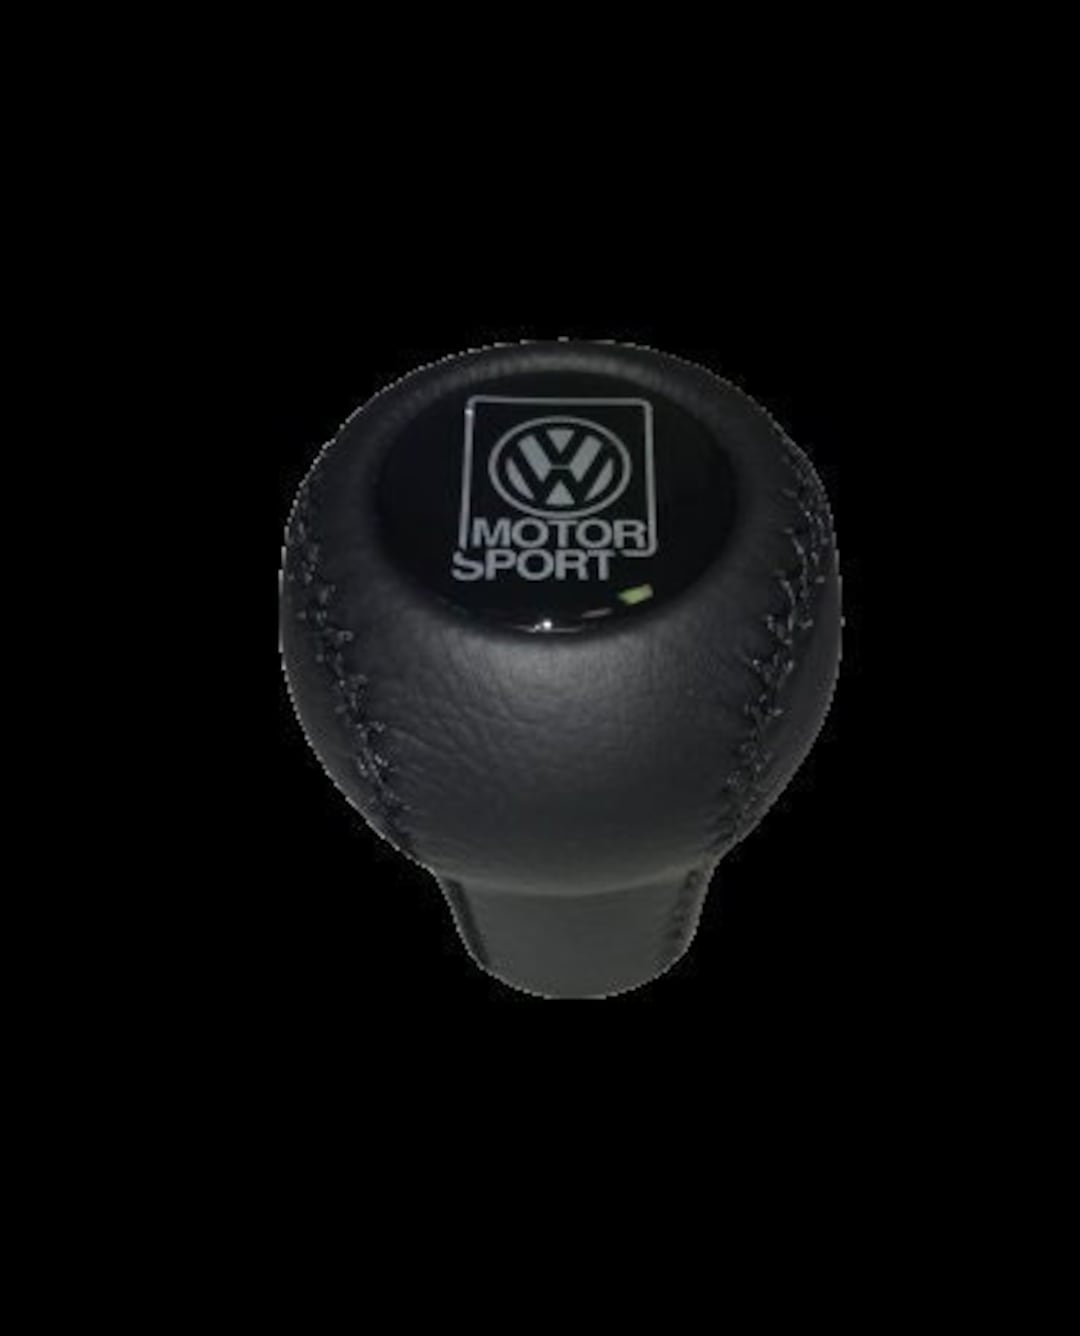 Handmade VW Motorsport Gear Shift Knob 4 5 Speed Golf Mk1 Mk2 Mk3